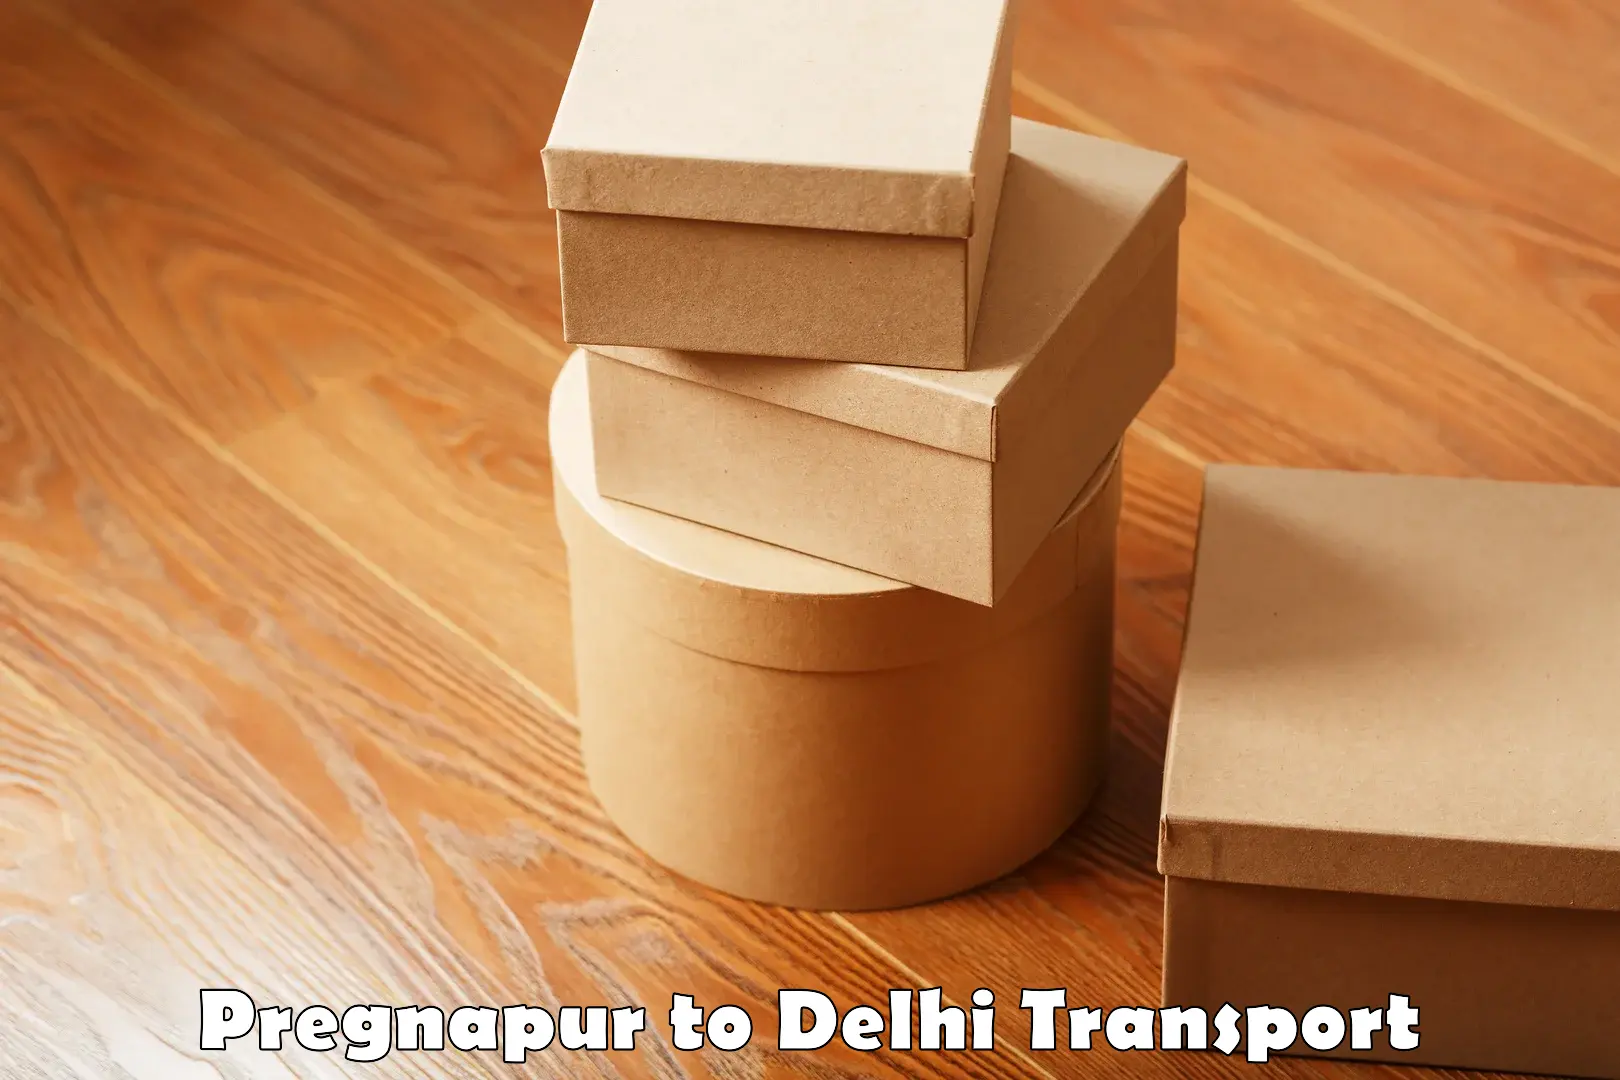 Commercial transport service Pregnapur to NIT Delhi